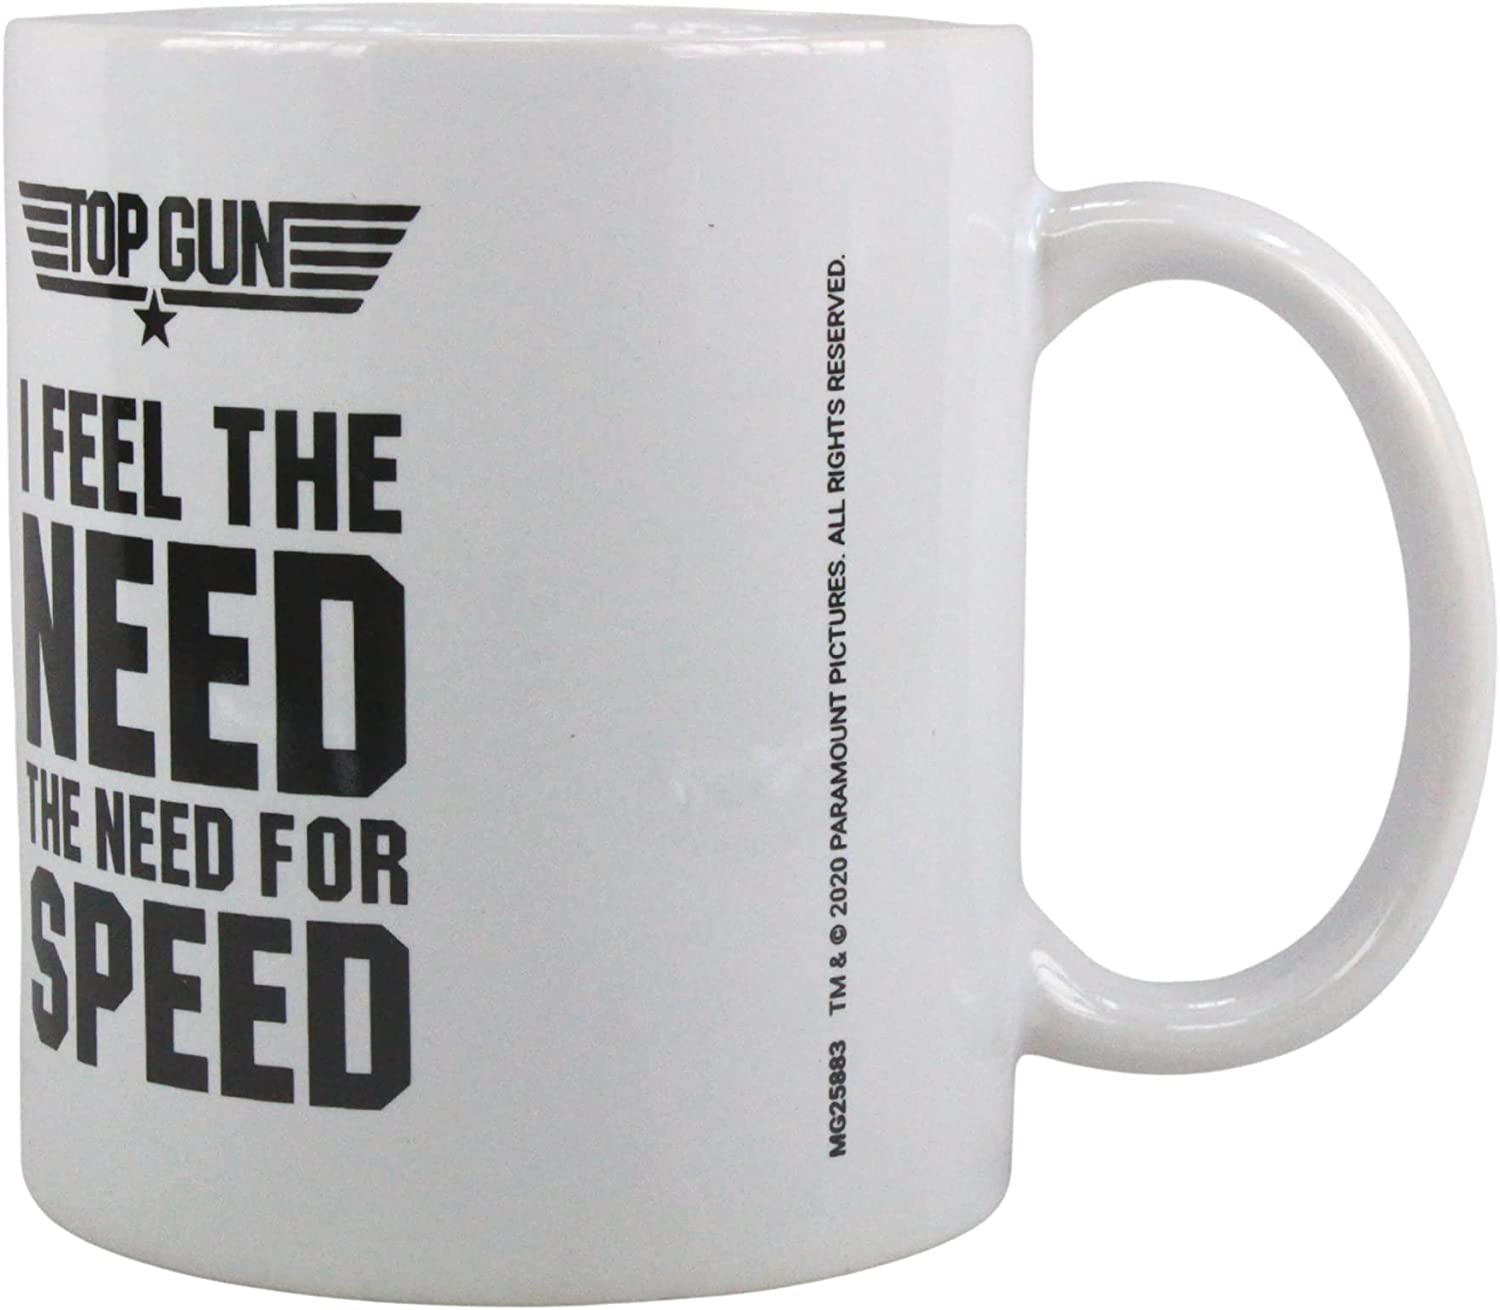 Top Gun Maverick 315ml Maverick Helmet & Need for Speed Ceramic Mugs - Toptoys2u